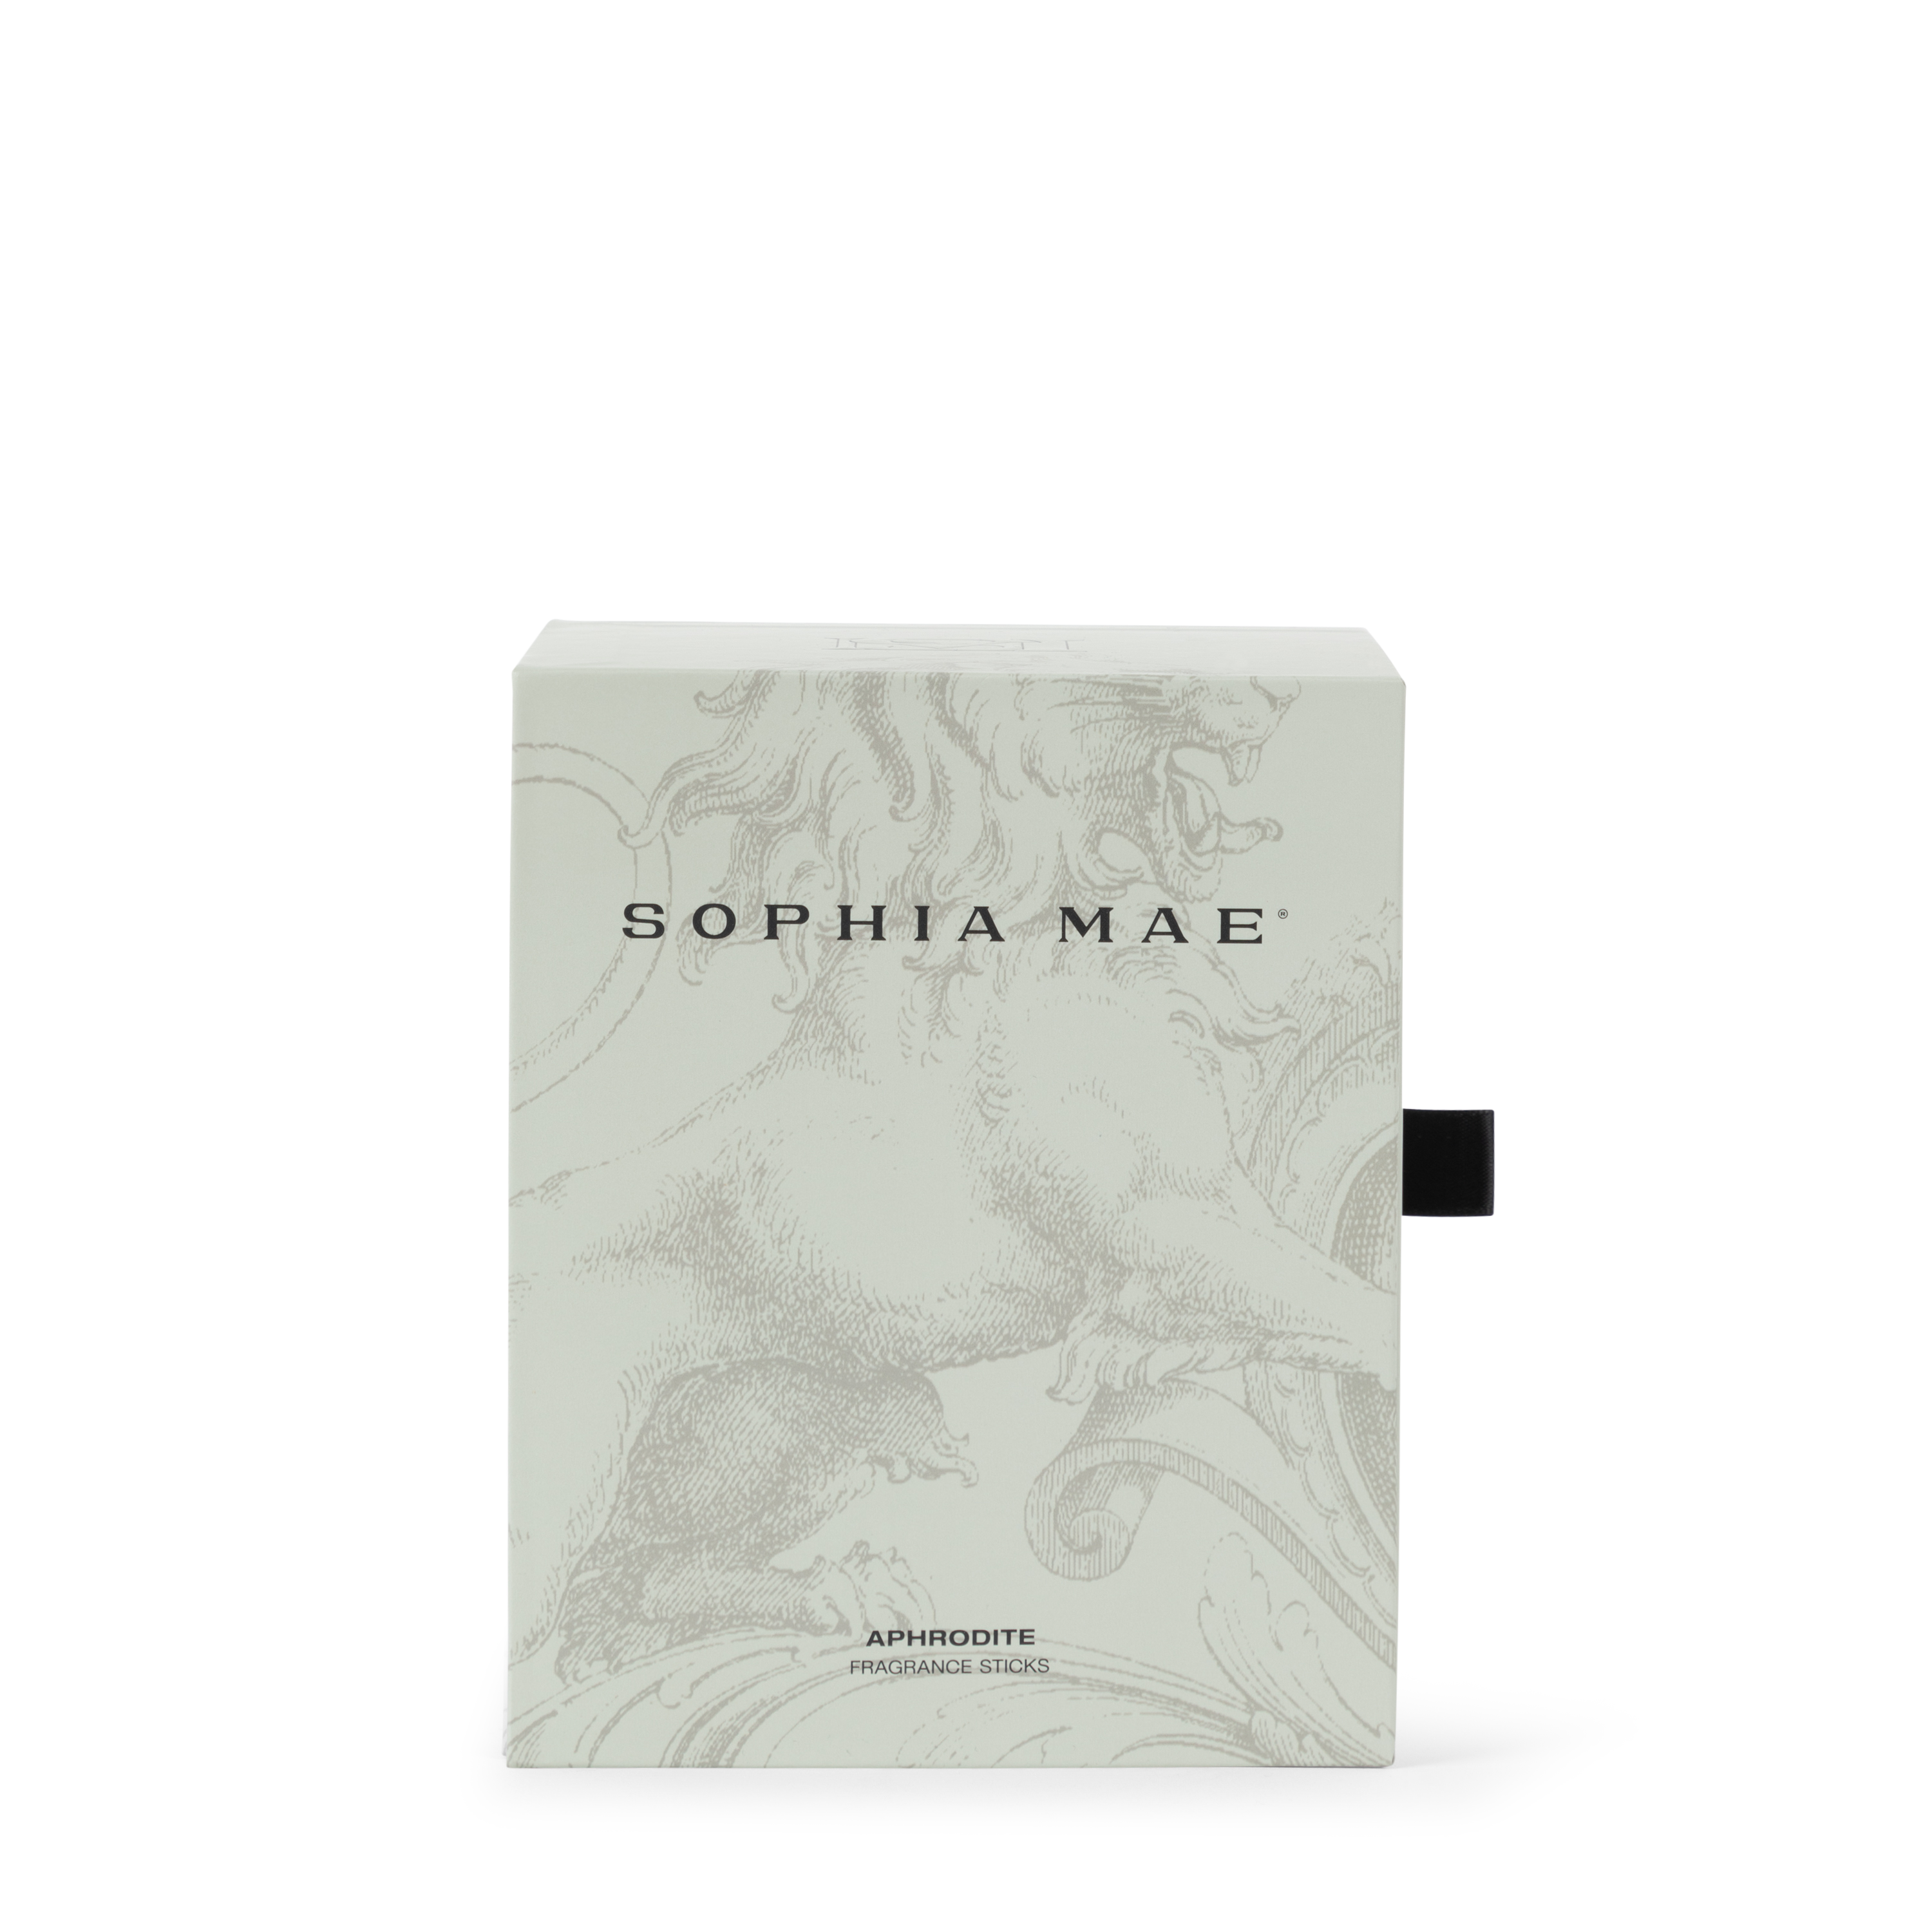 Fragrance sticks Aphrodite | SOPHIA MAE by Monica Geuze